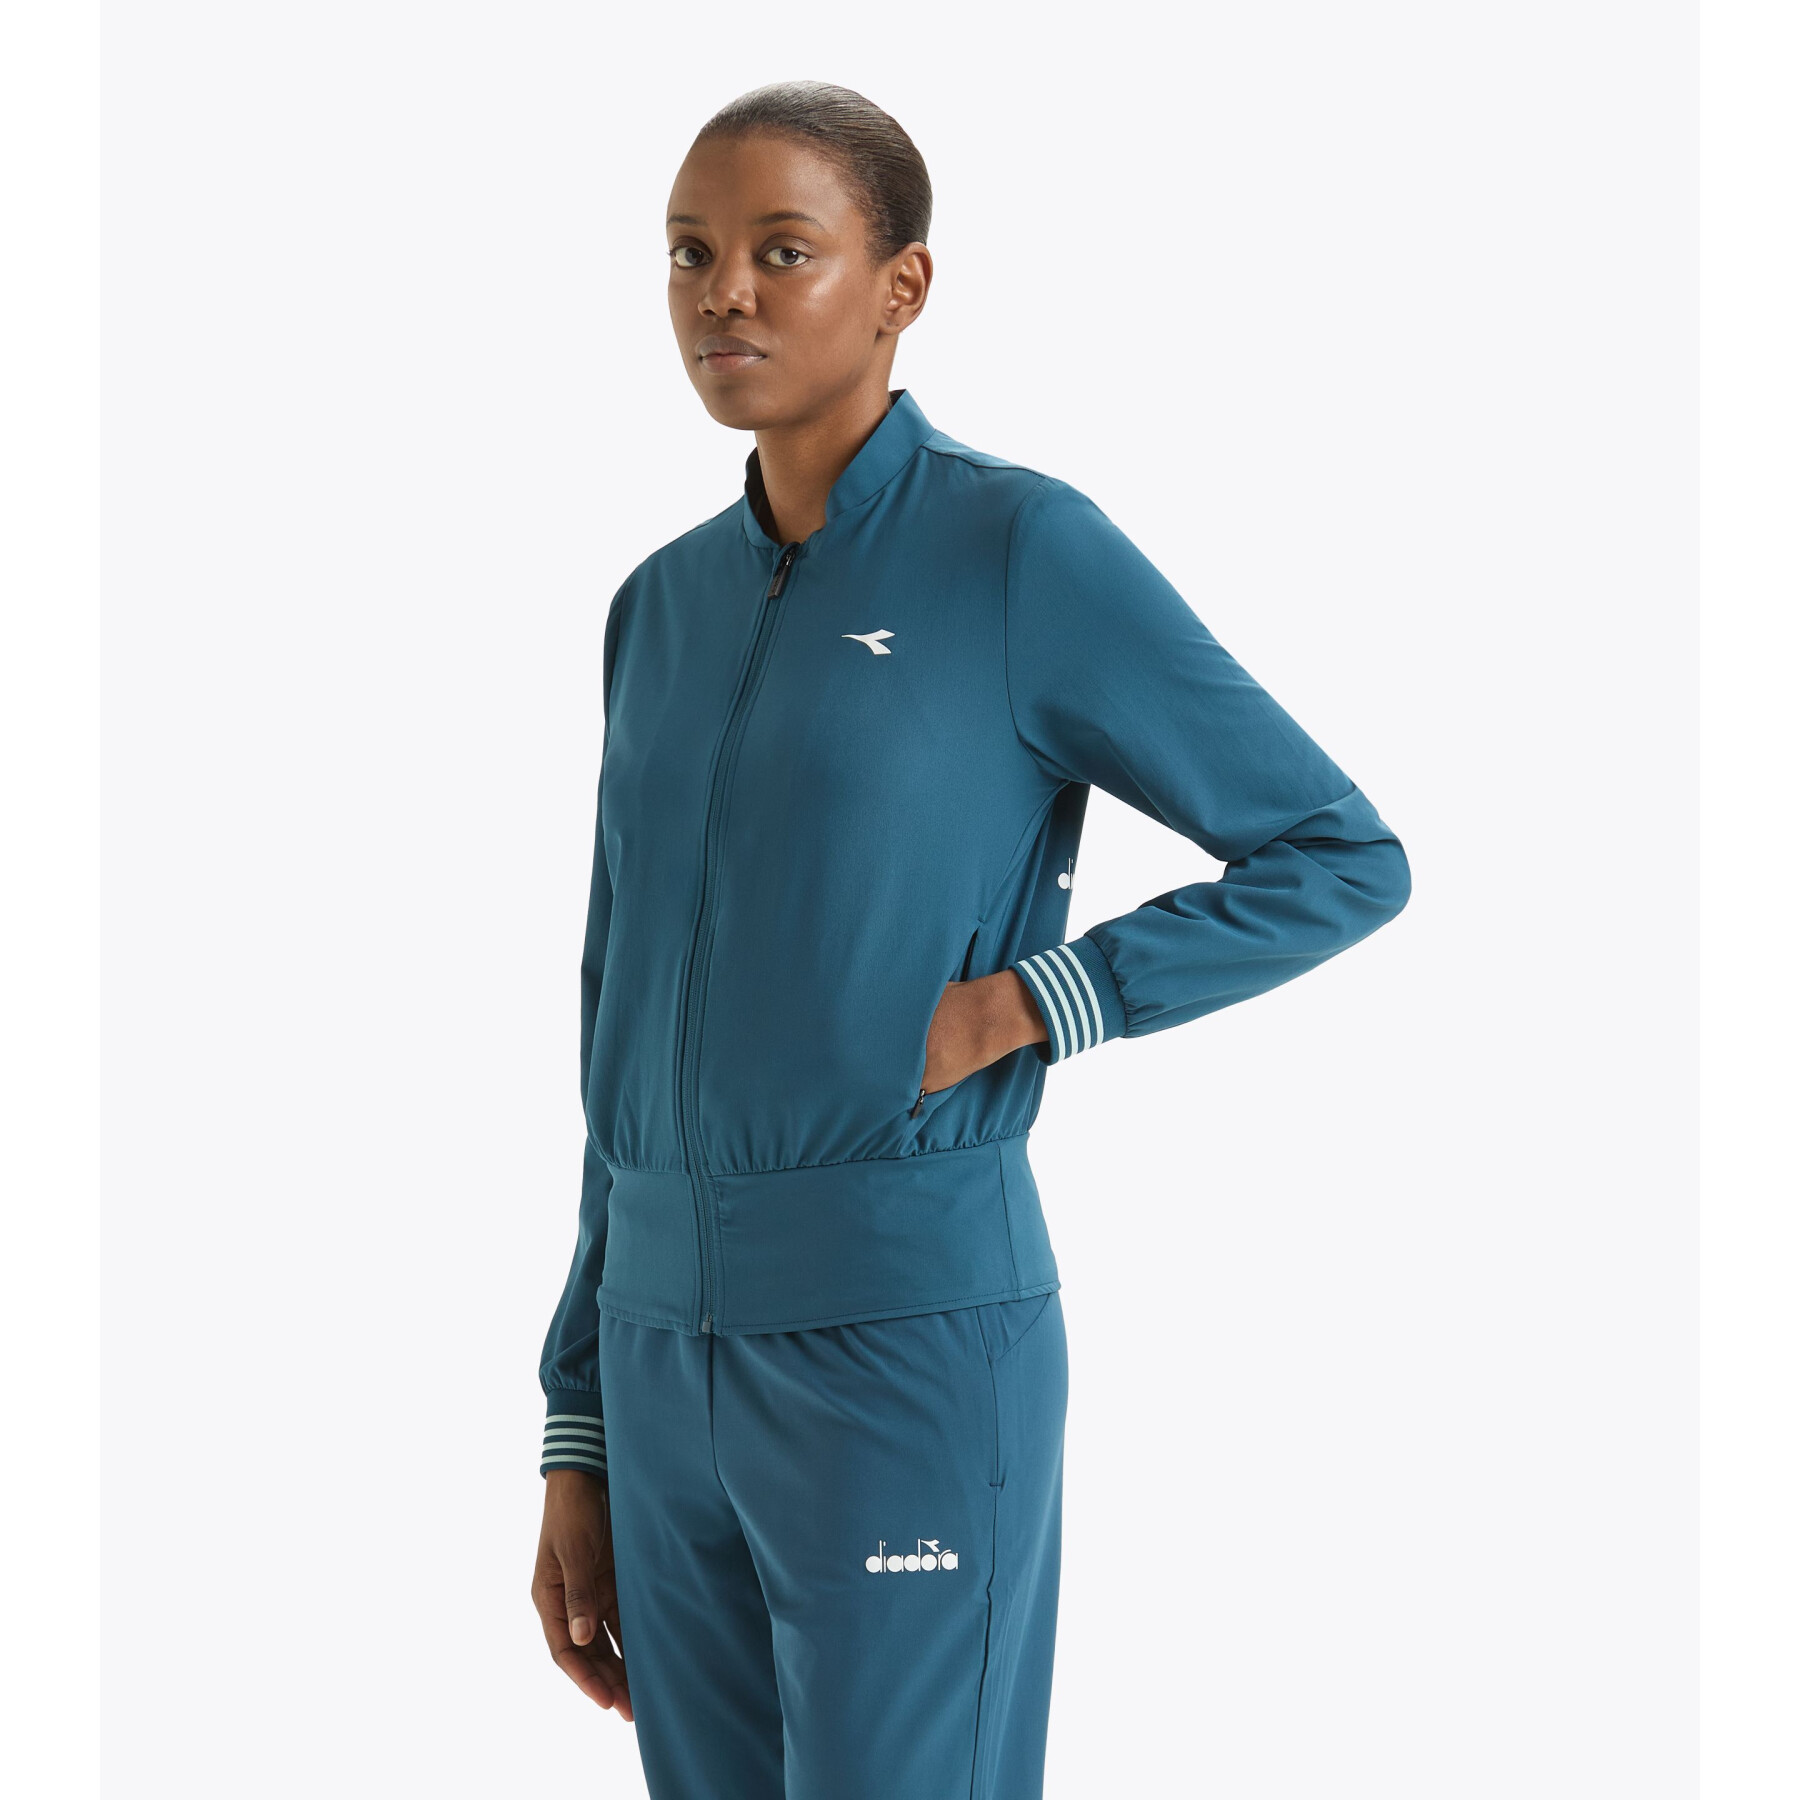 Women's zip-up tennis sweatshirt Diadora Icon